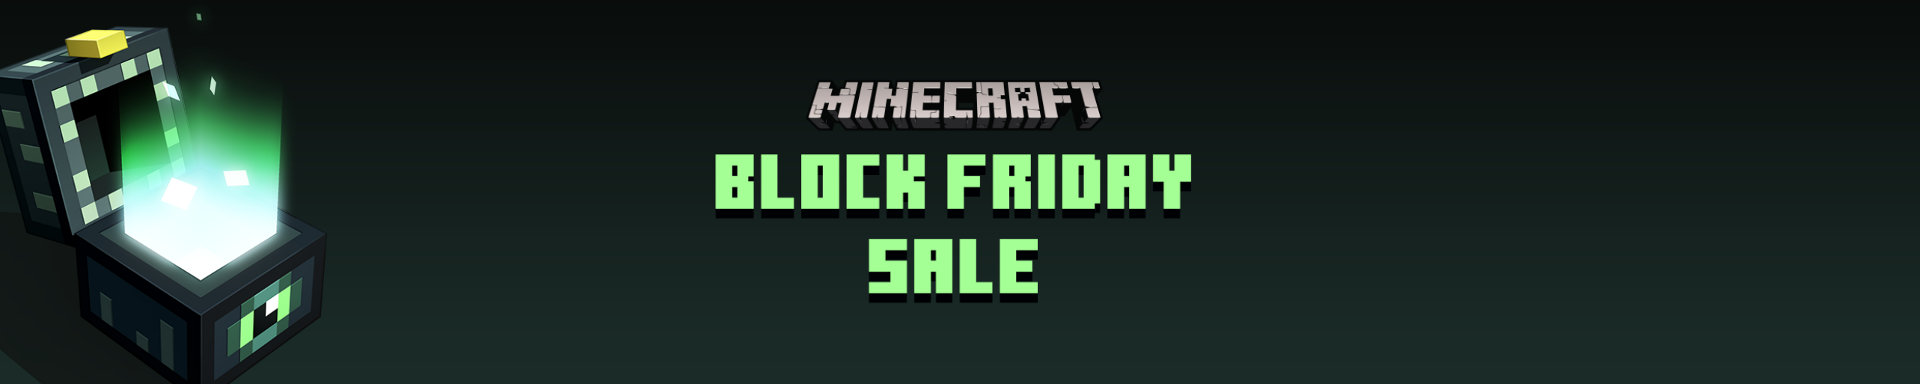 Minecraft Block Friday Sale 2020 slice